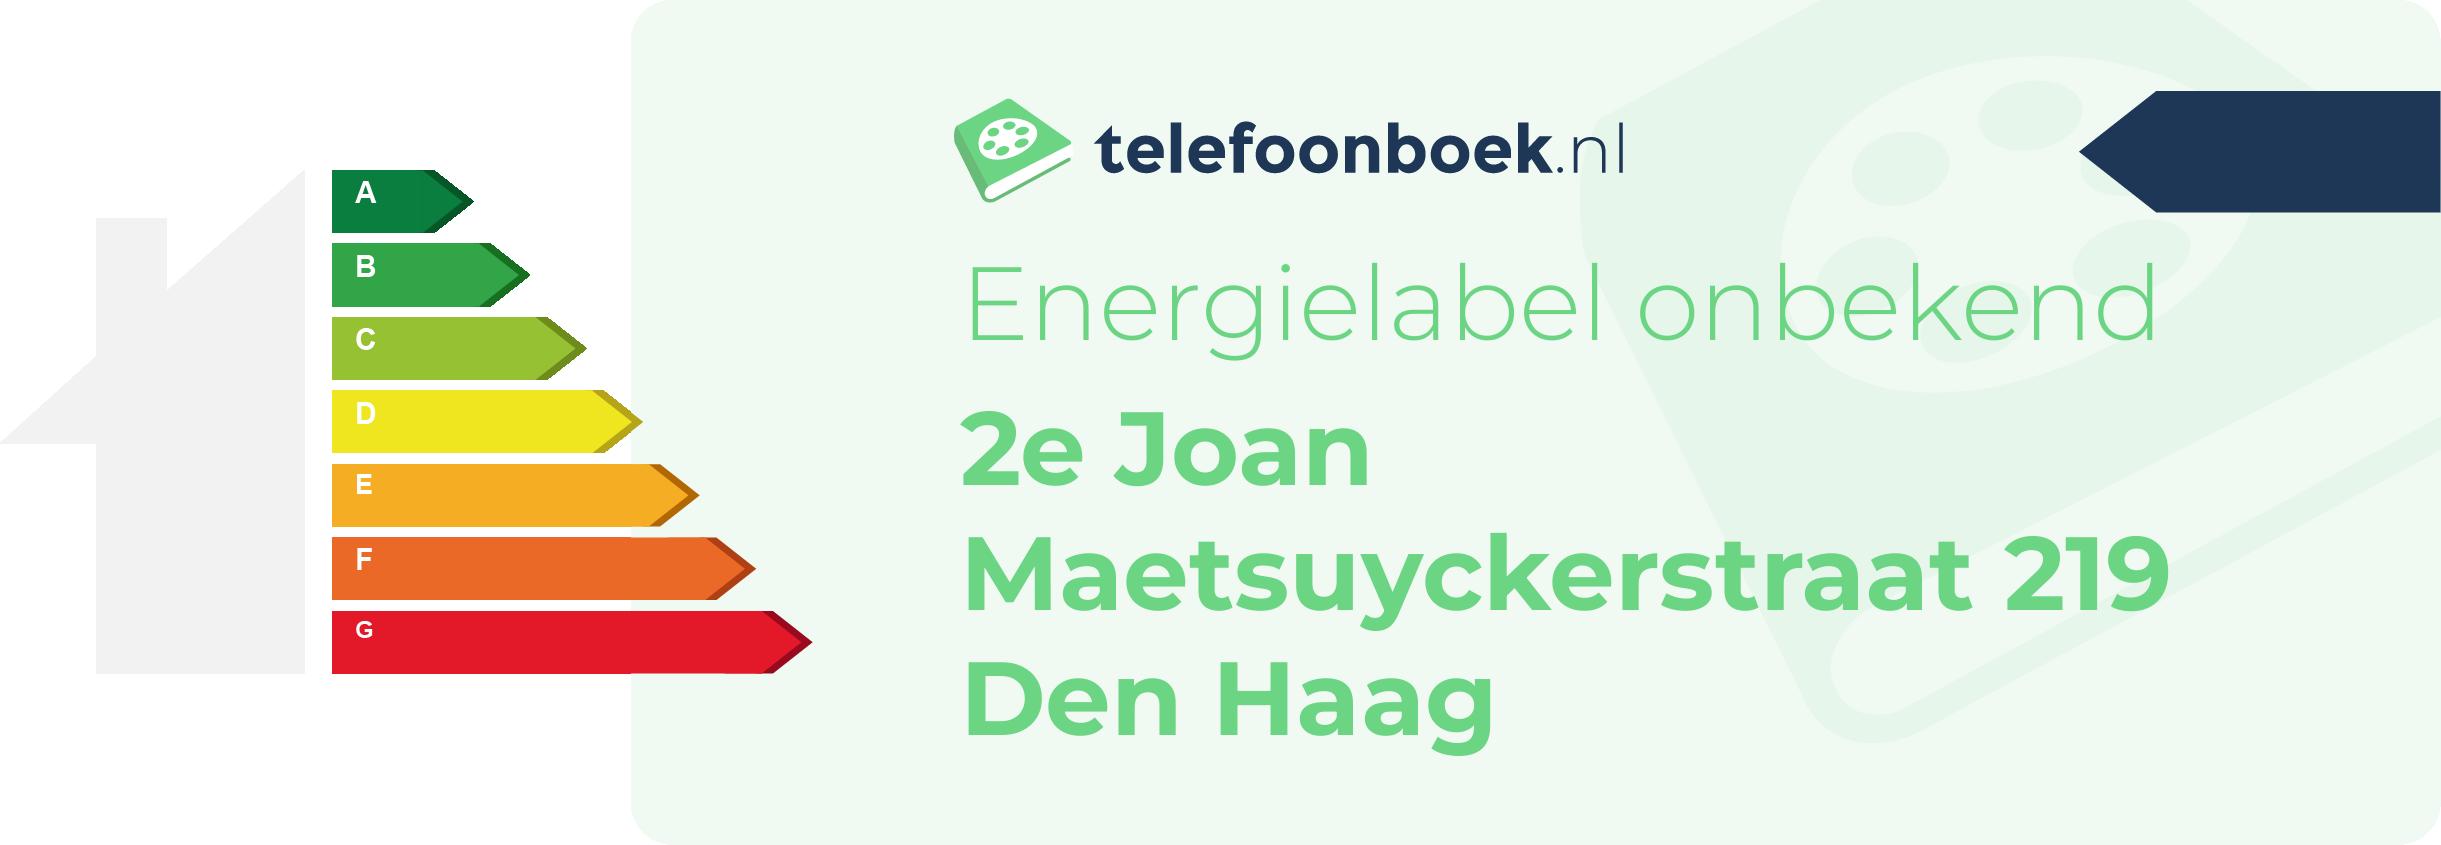 Energielabel 2e Joan Maetsuyckerstraat 219 Den Haag